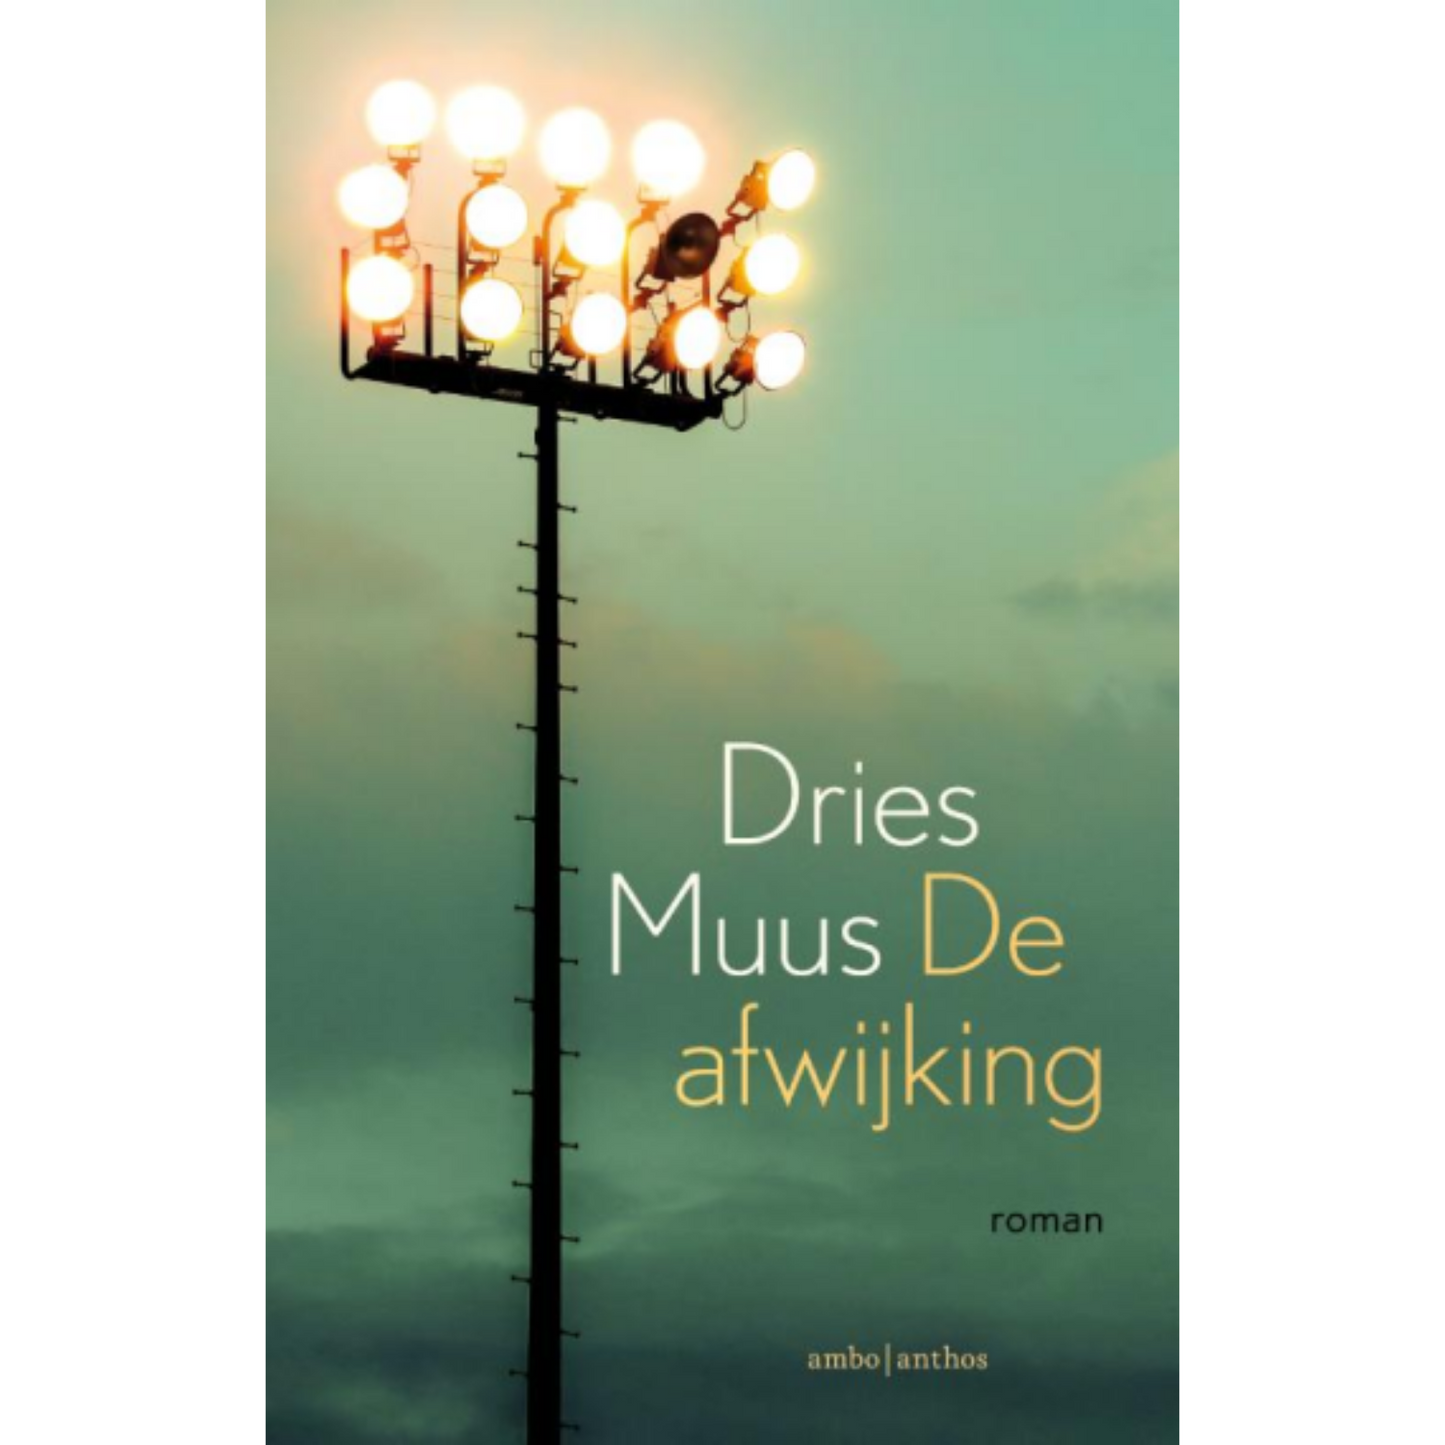 The deviation - Dries Muus